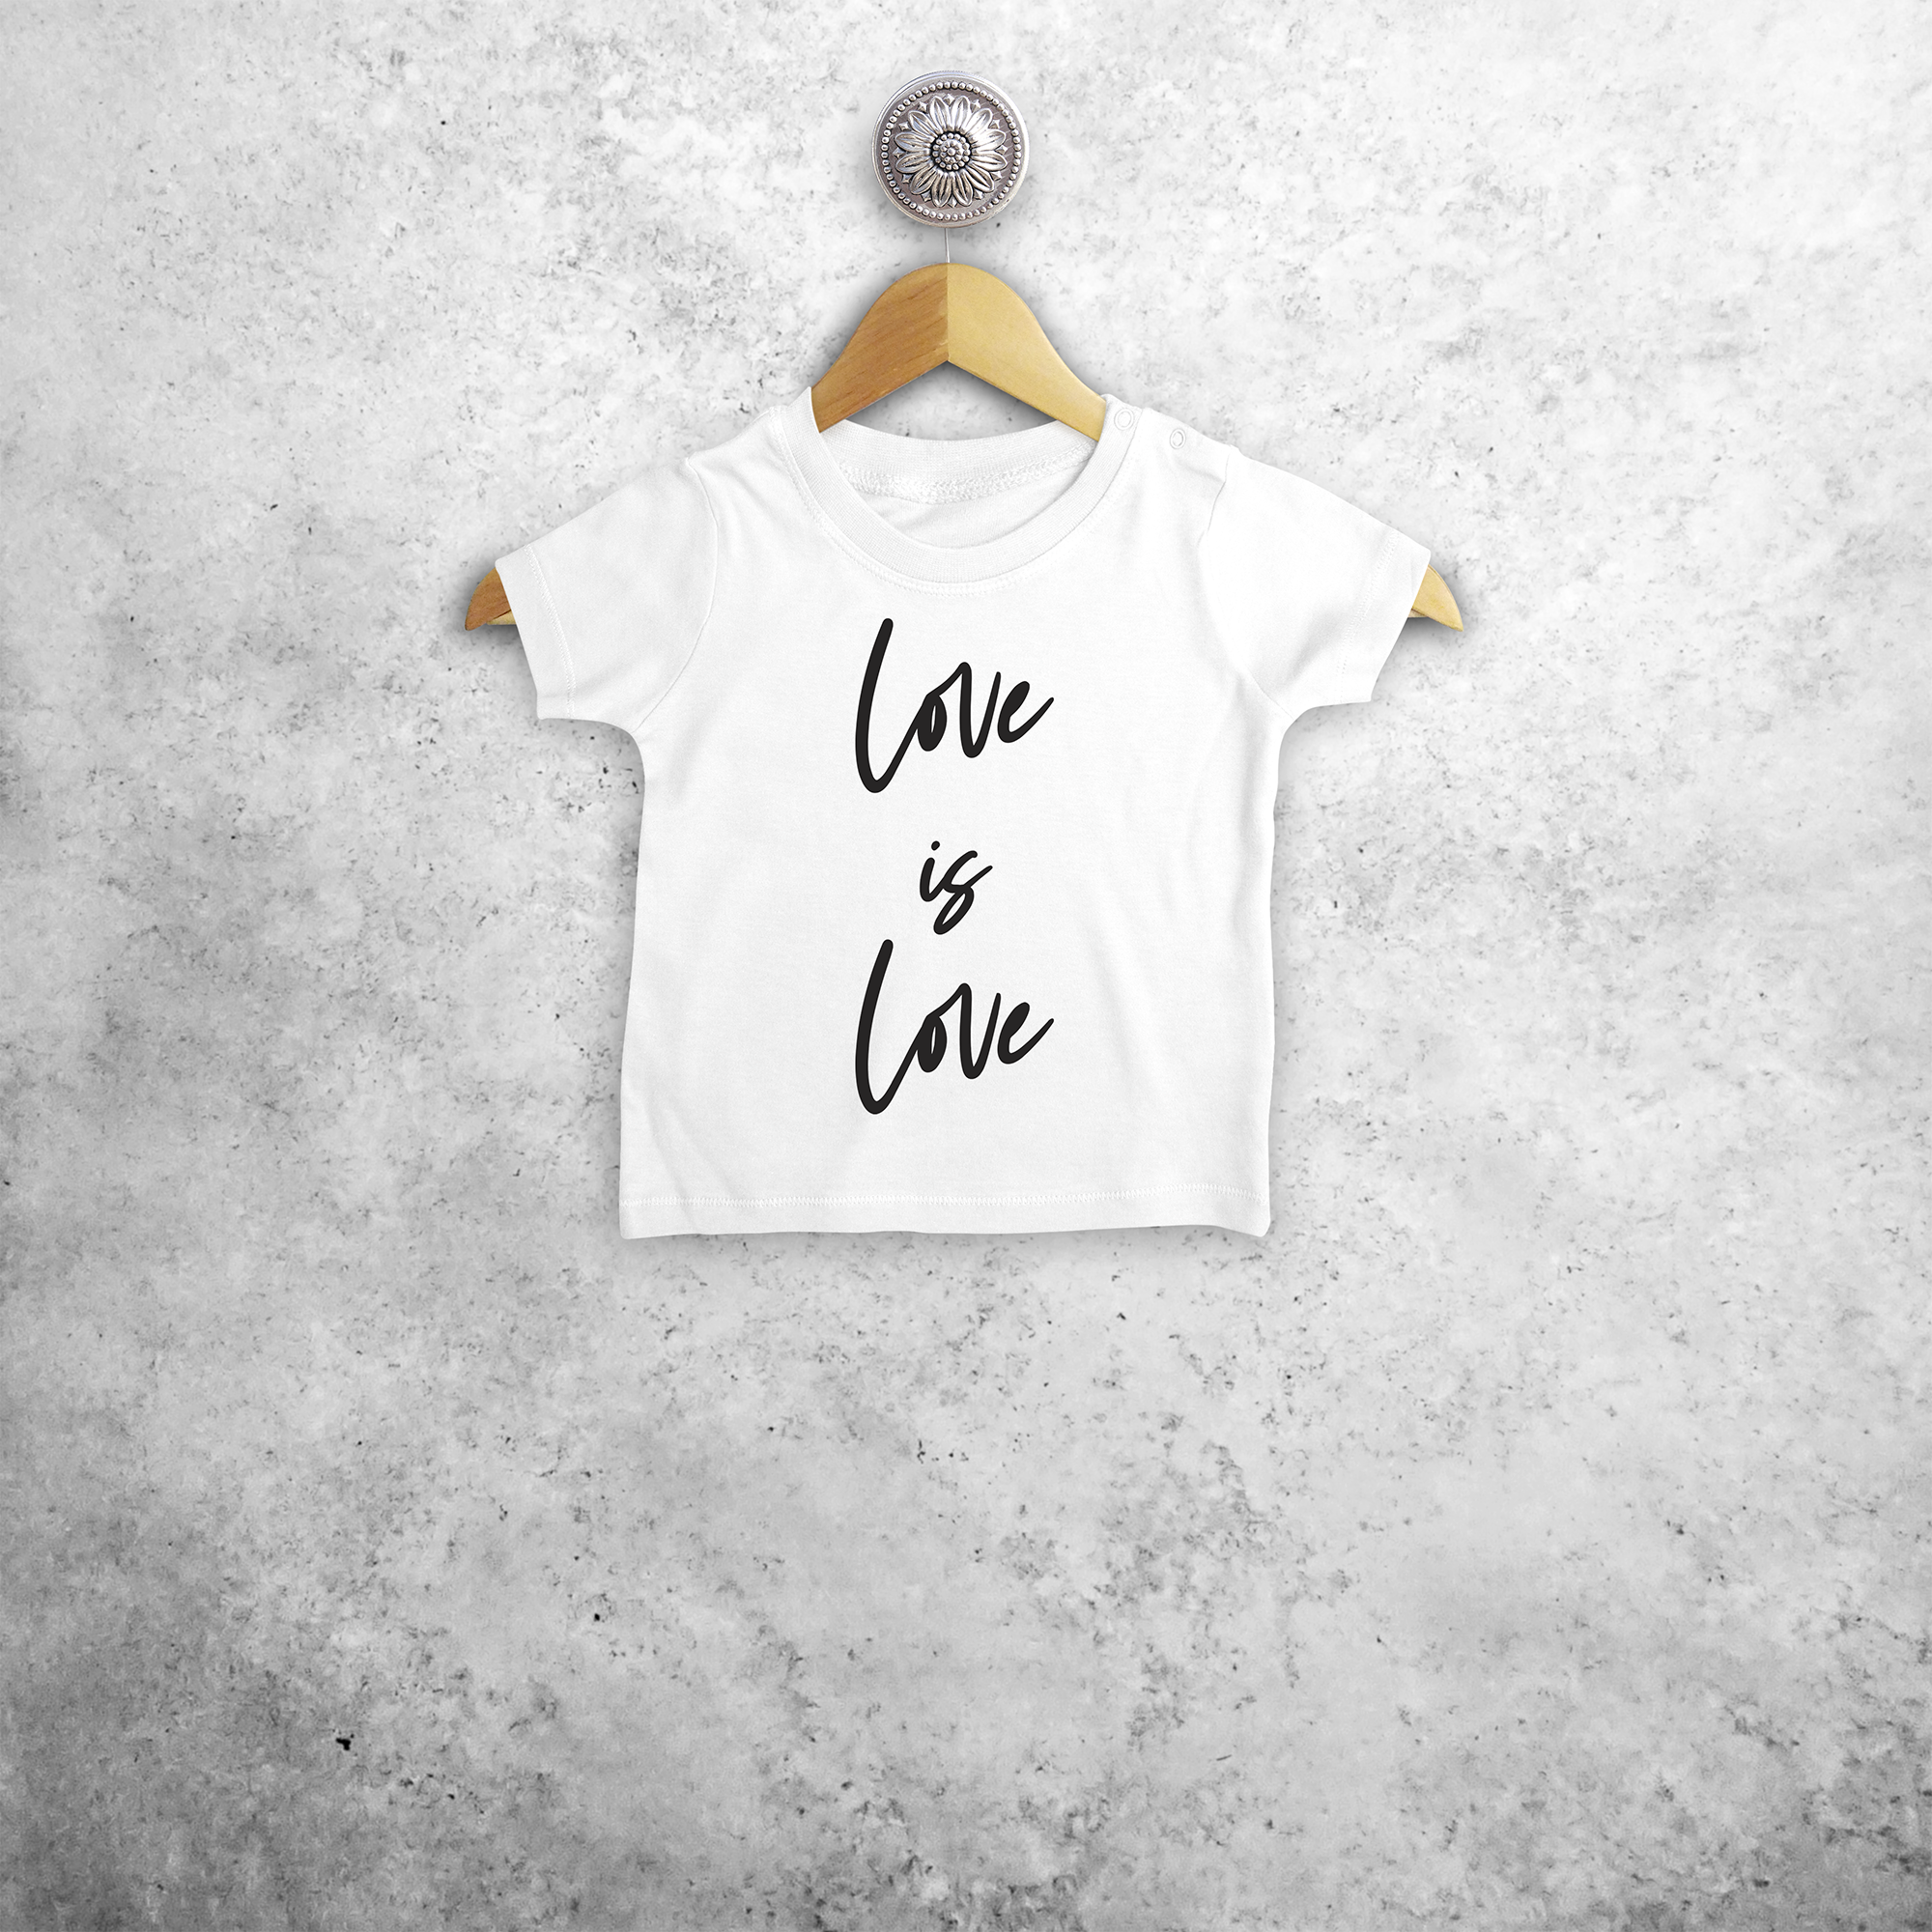 'Love is love' baby shortsleeve shirt